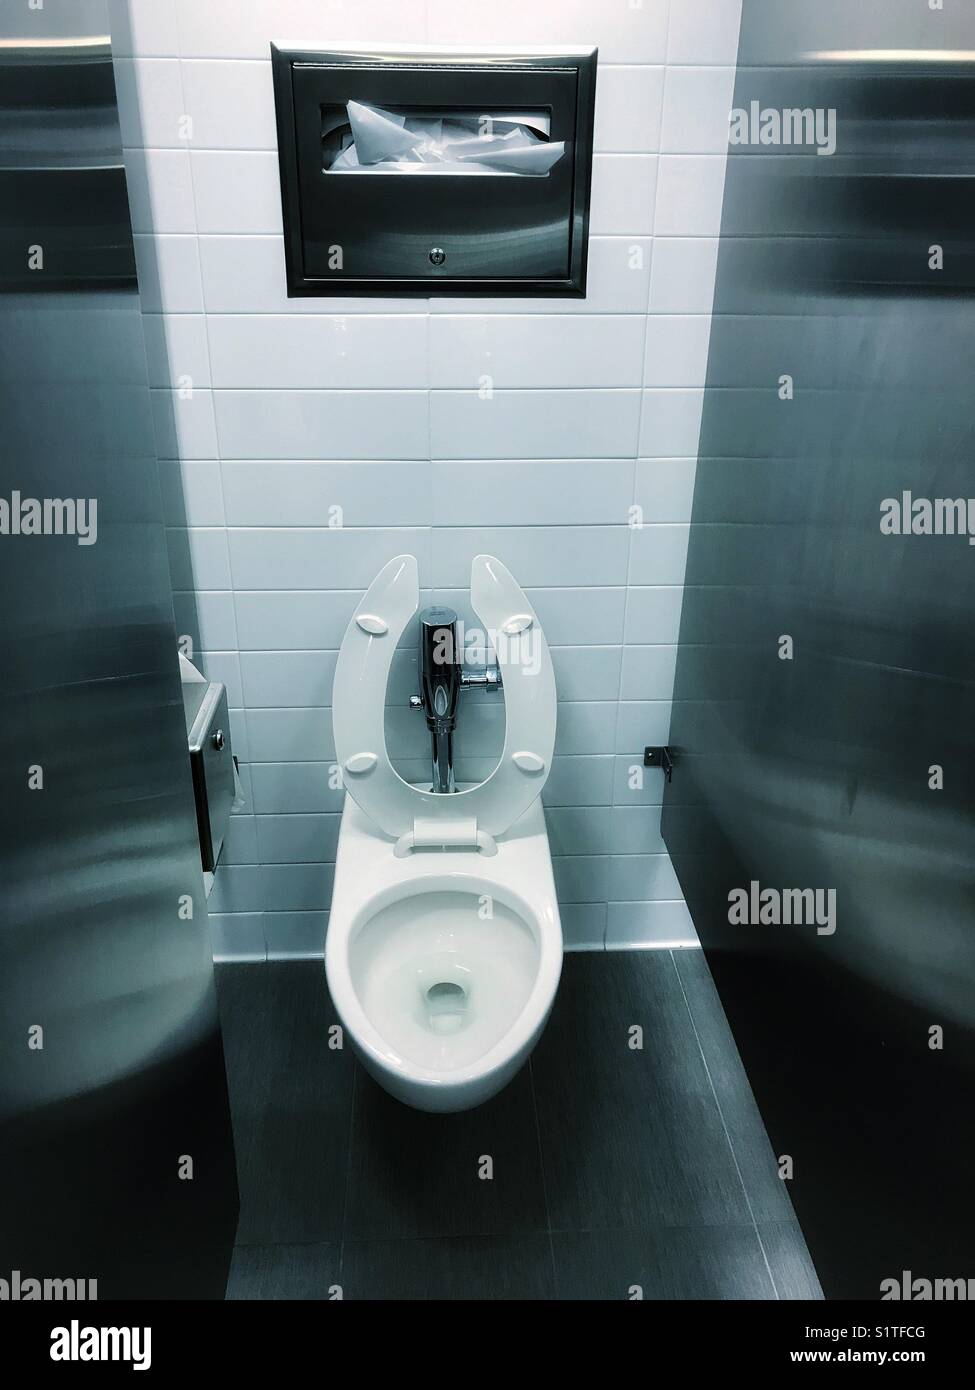 https://c8.alamy.com/comp/S1TFCG/vacant-toilet-in-a-public-bathroom-S1TFCG.jpg